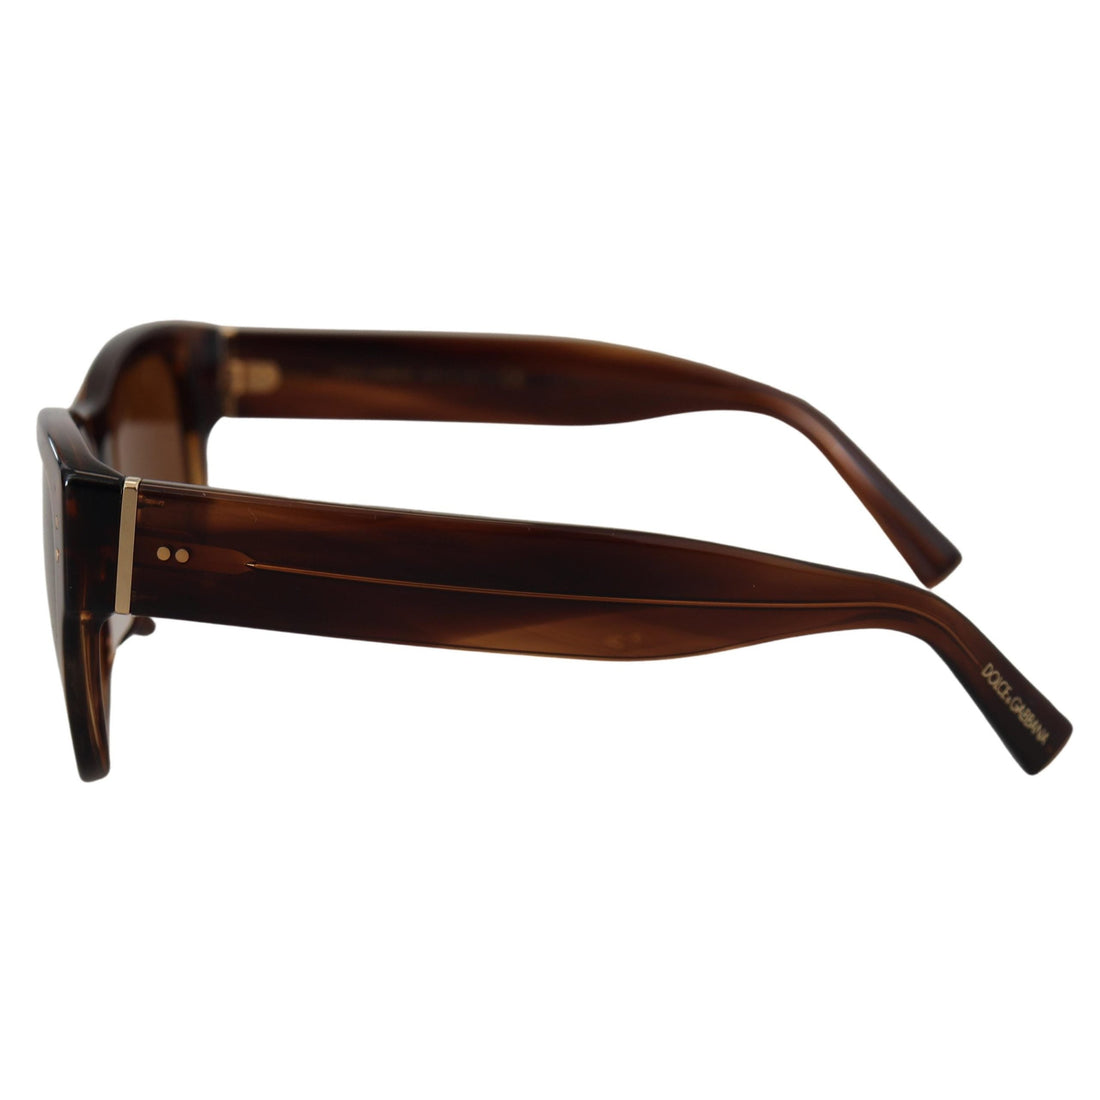 Dolce & Gabbana Brown Square Acetate Frame UV DG4338F Sunglasses